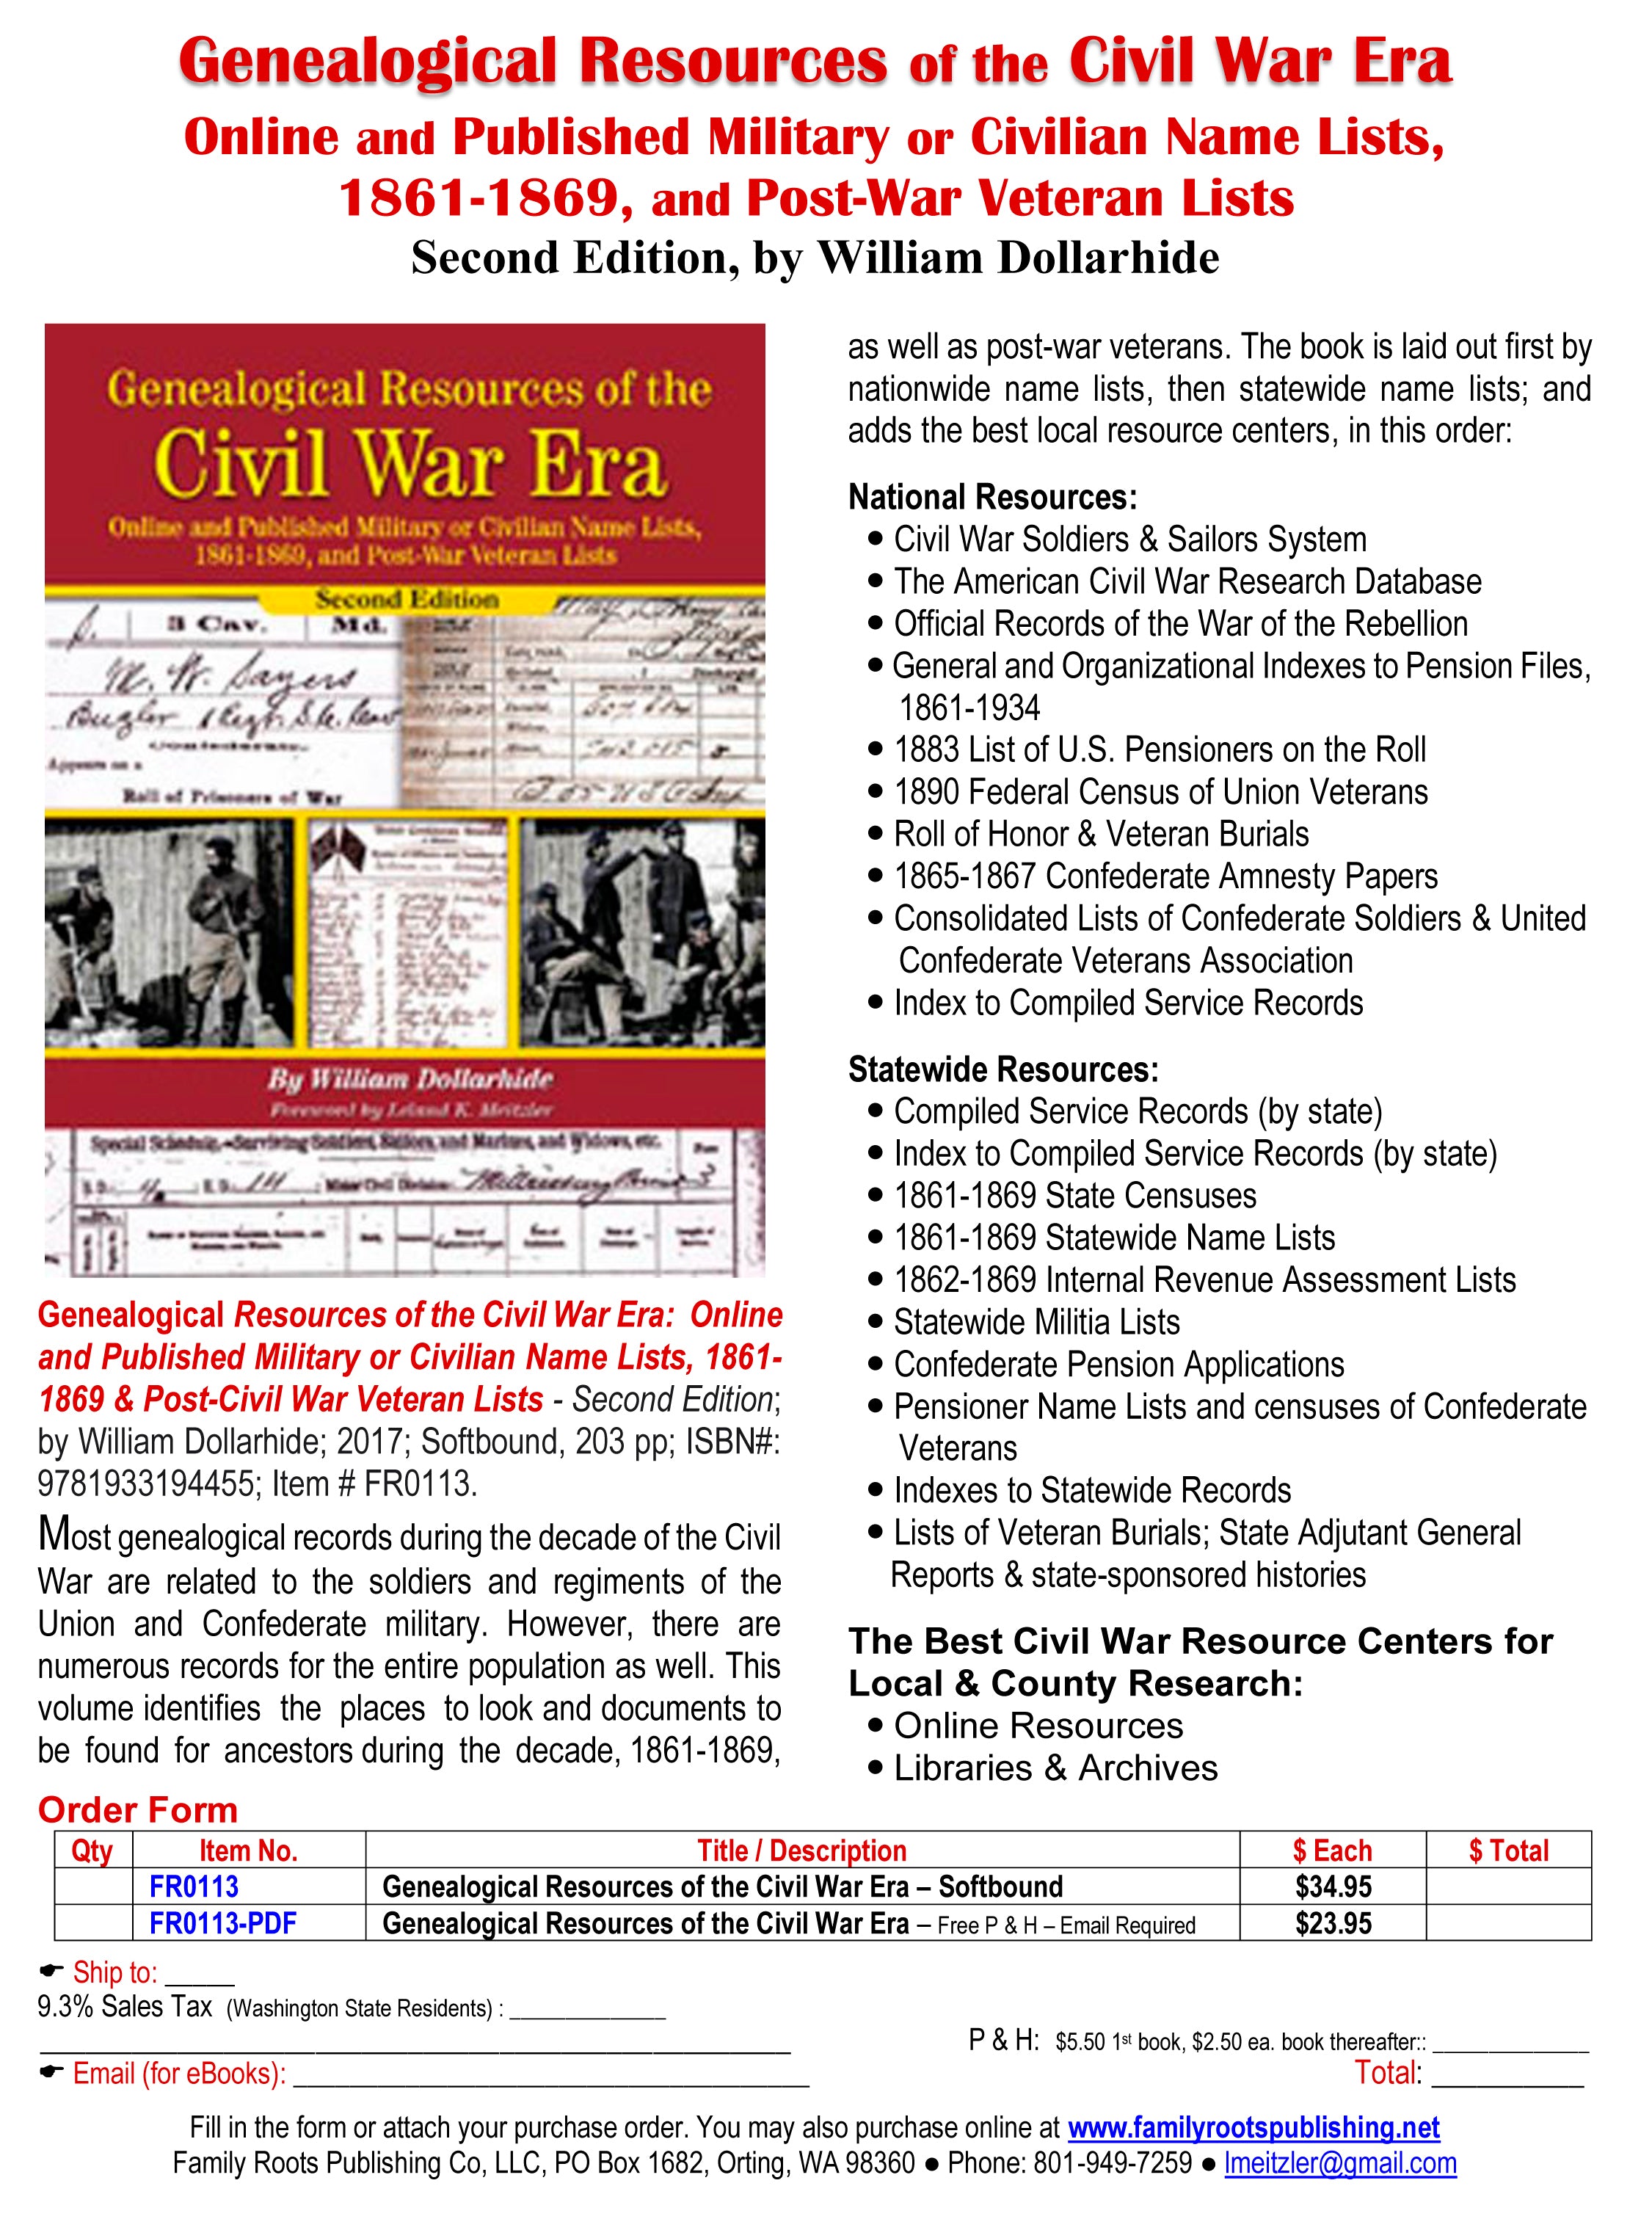 FREE FLYER: Downloadable PDF Flyer - Genealogical Resources of the Civil War Era